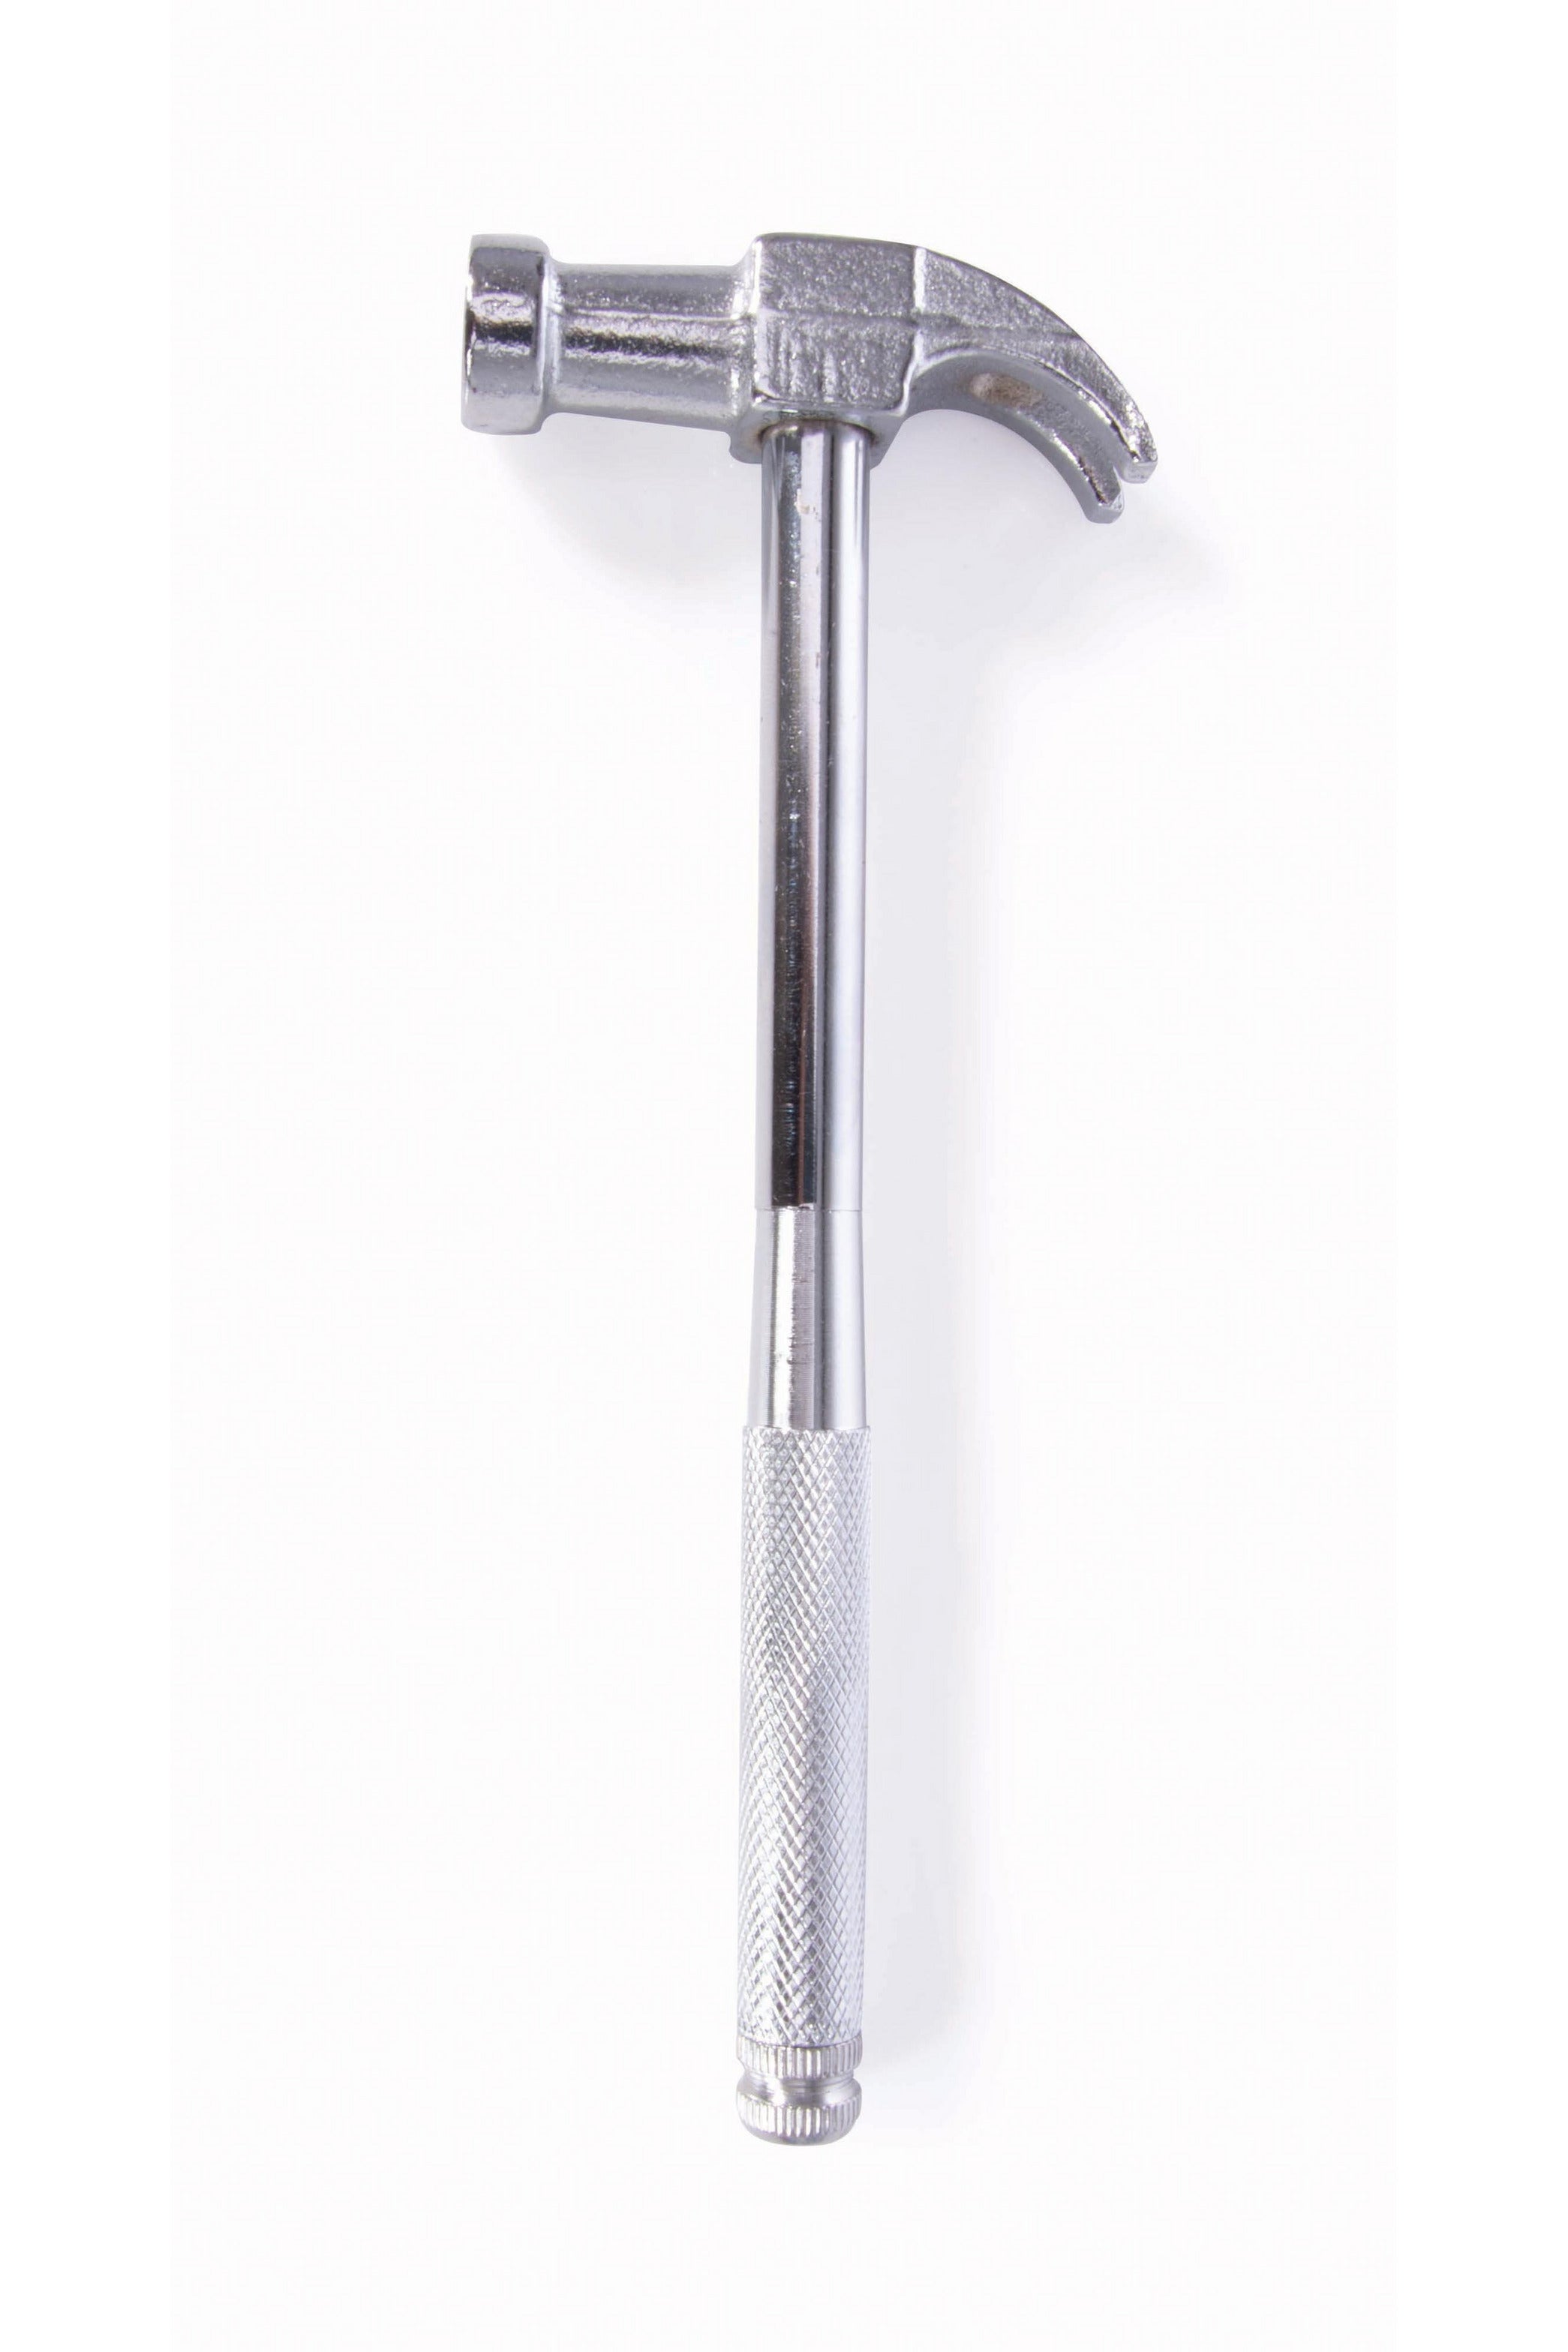 Hammer Tool - 6 in 1